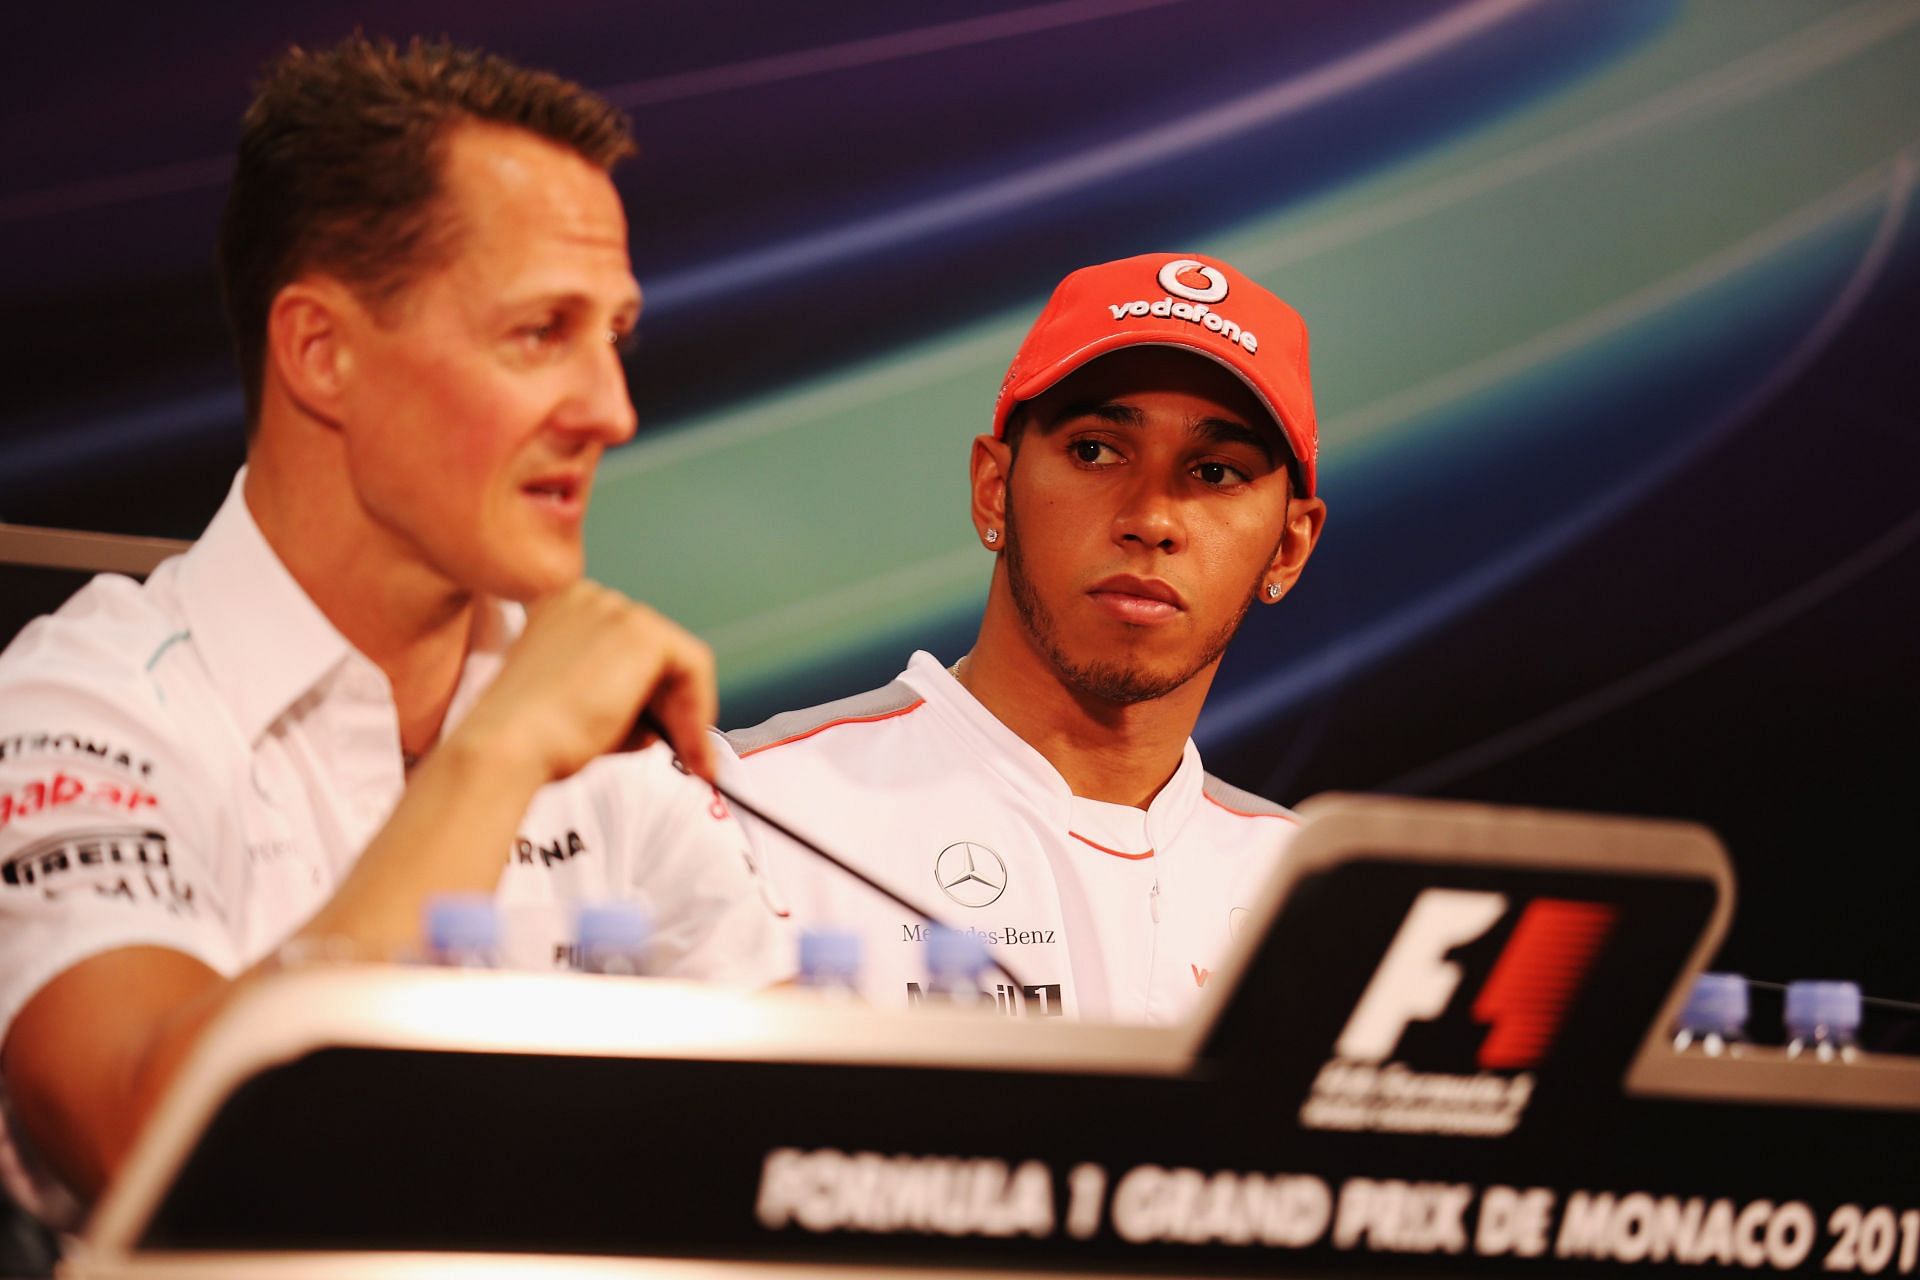 Schumacher and Hamilton